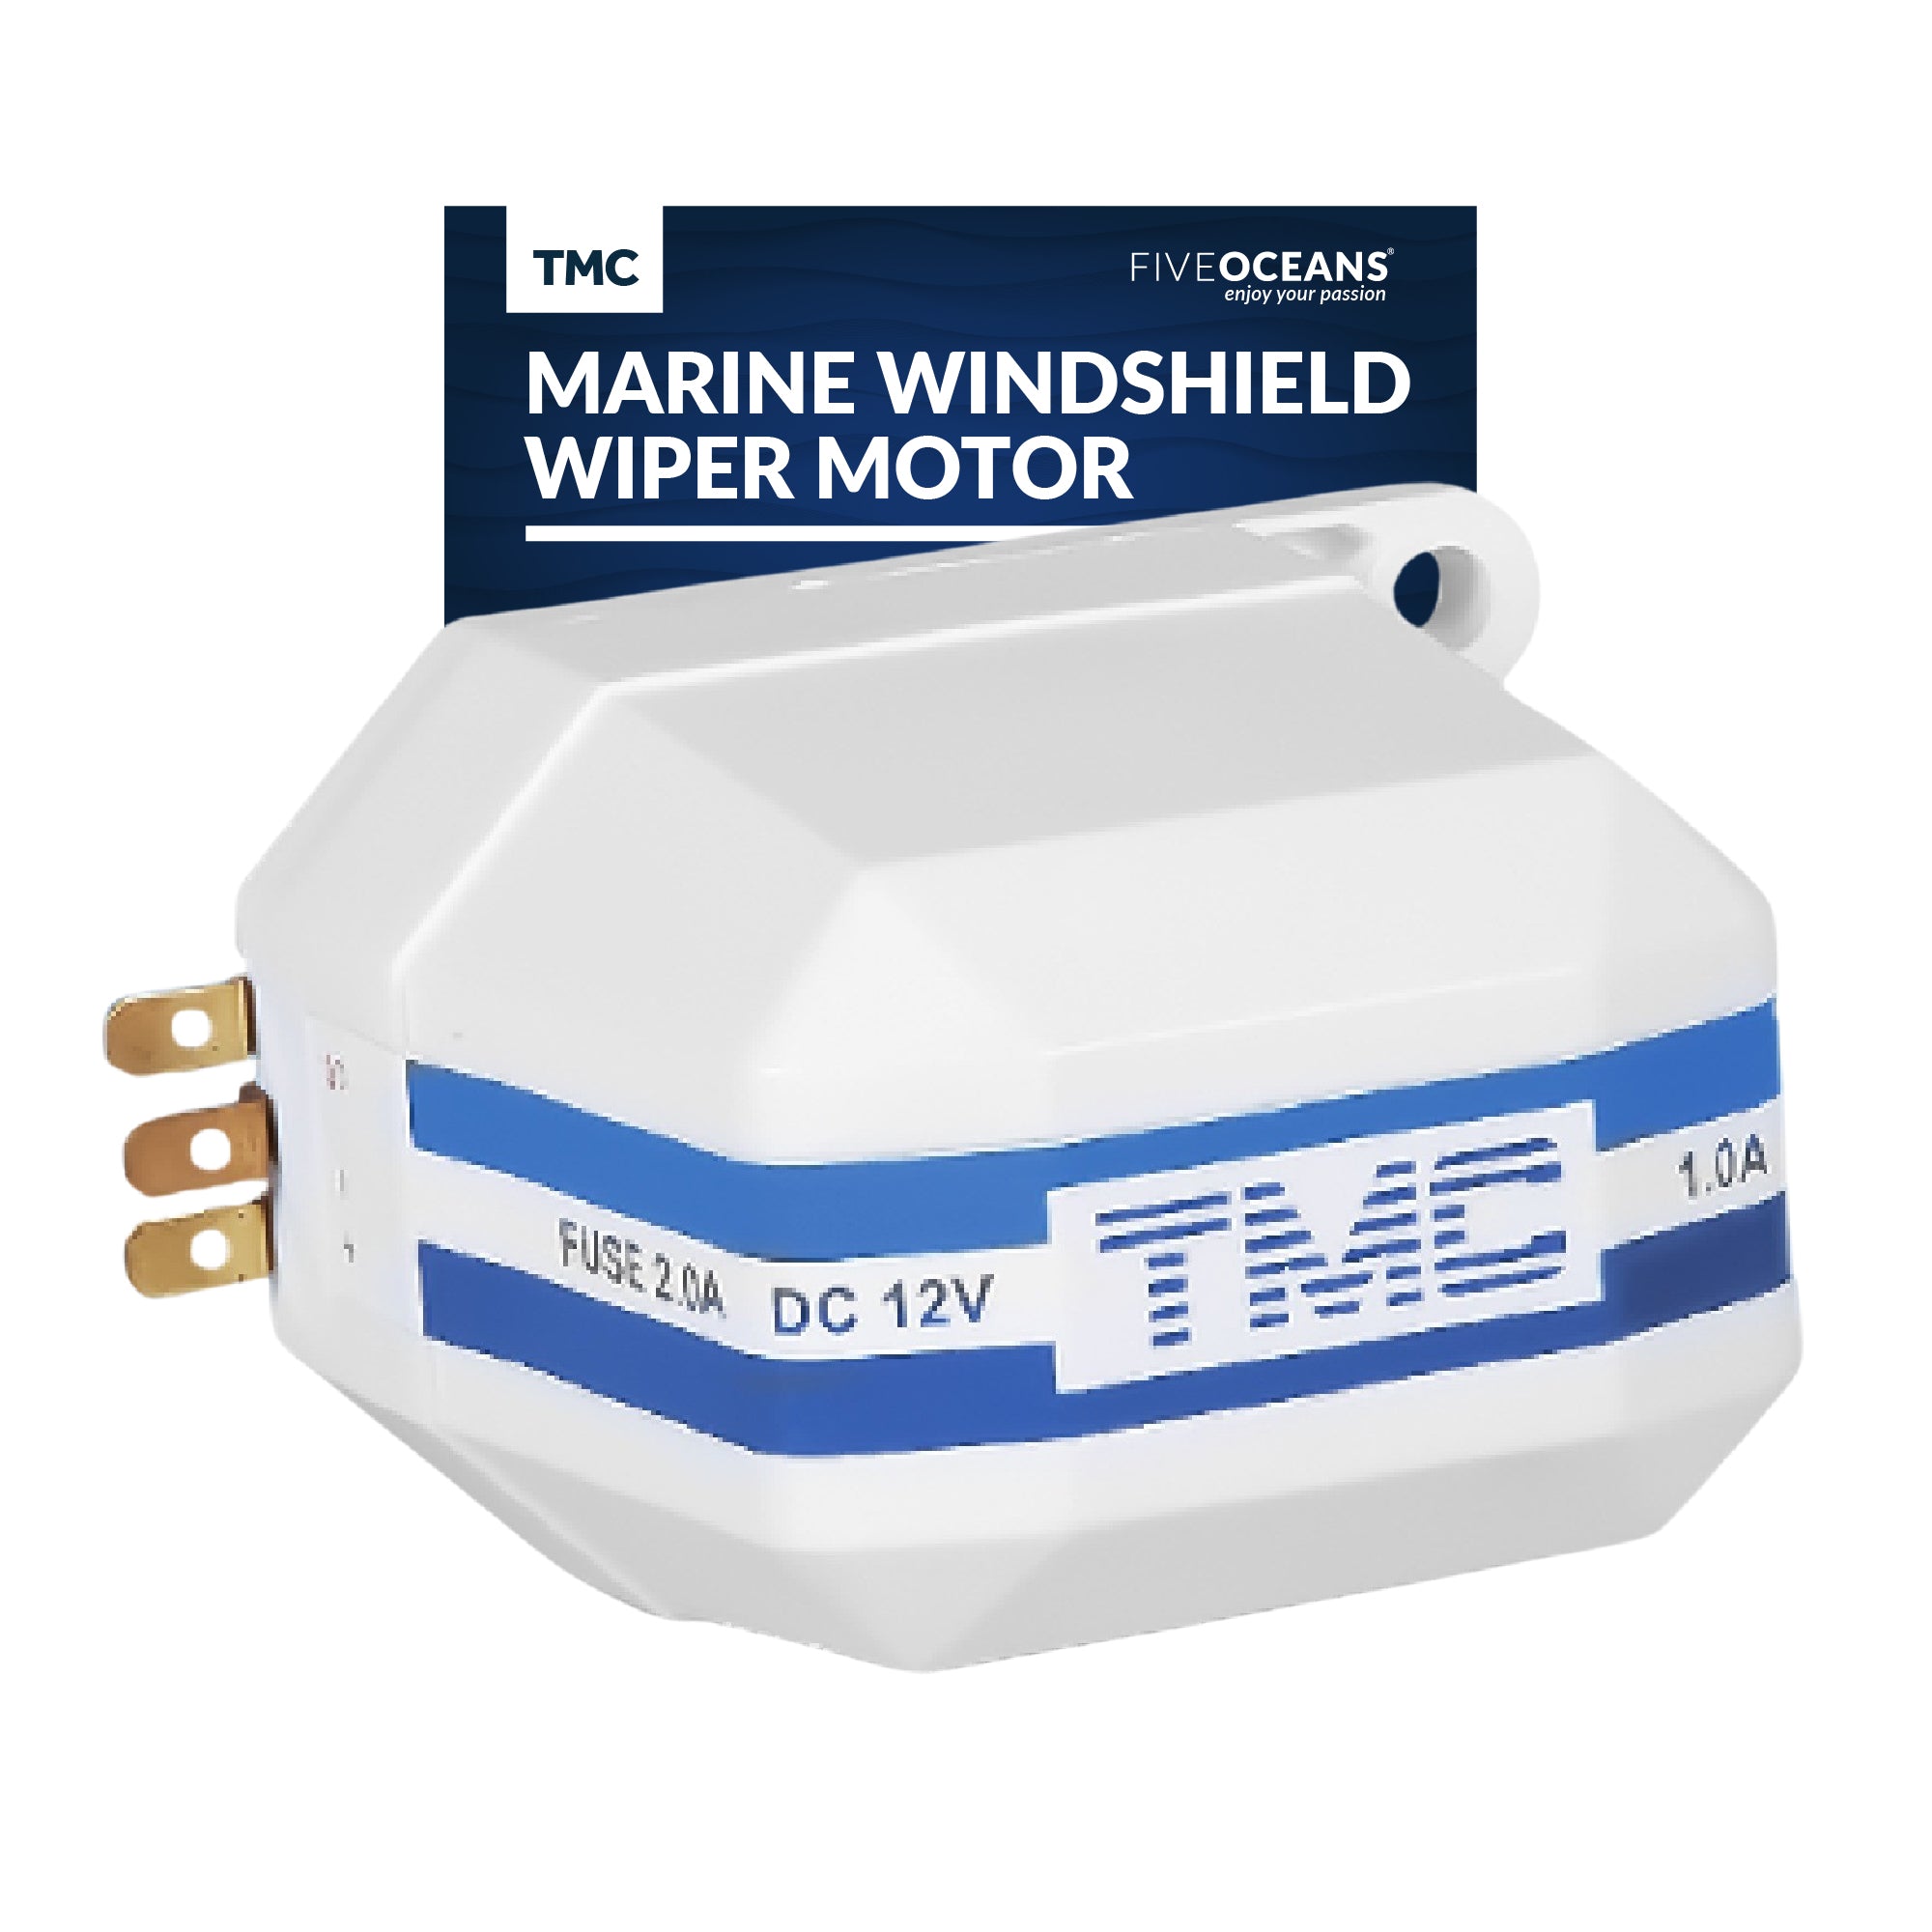 TMC Marine Windshield Wiper Motor, 12-V DC - FO745